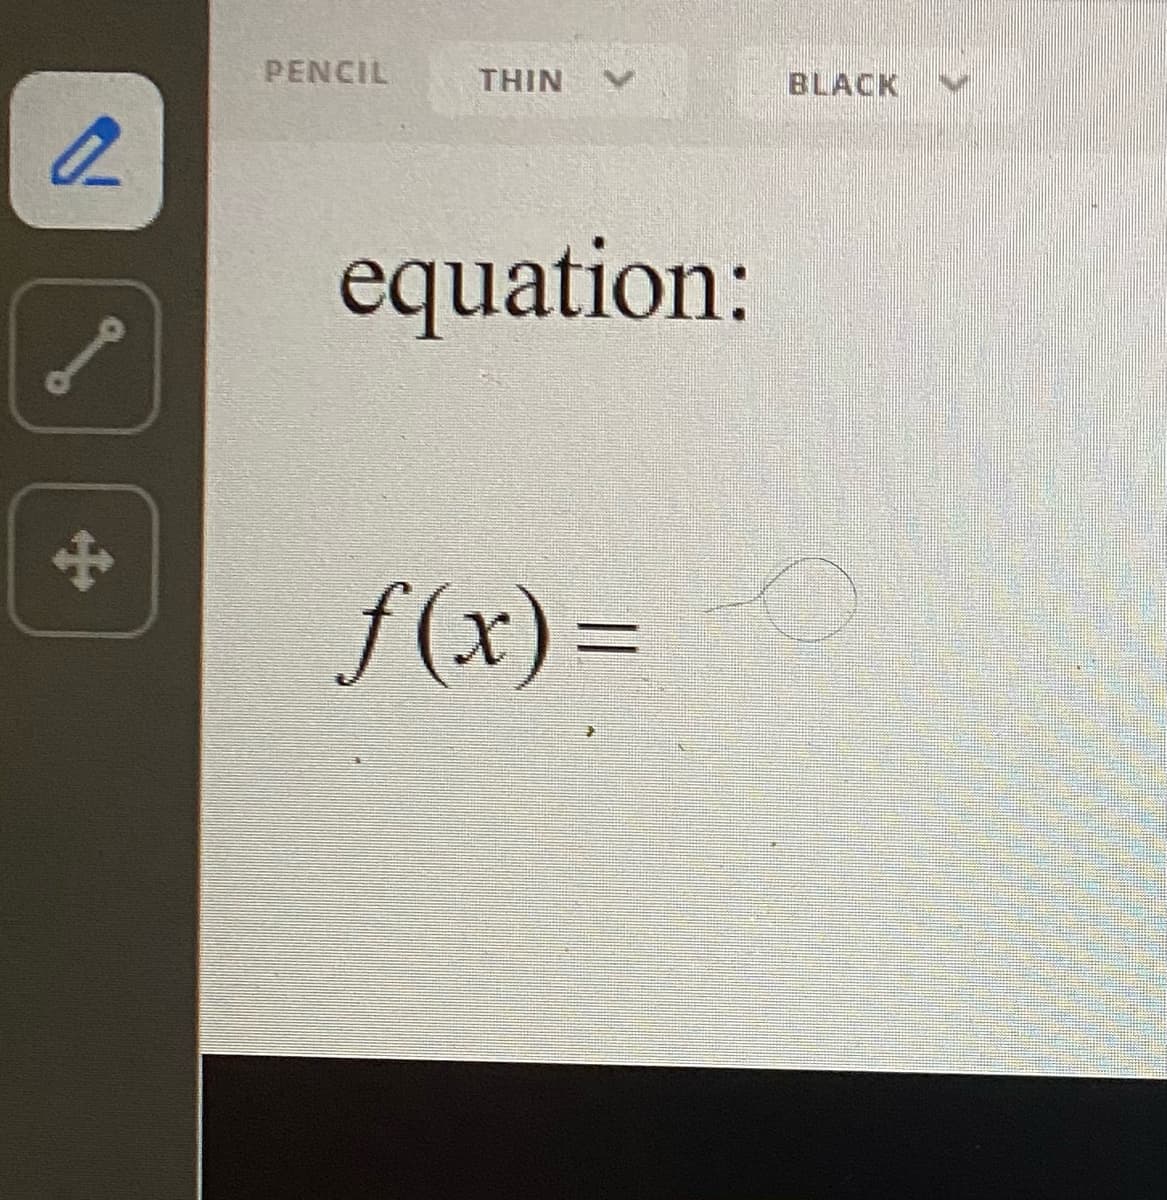 PENCIL
THIN
BLACK
equation:
f(x)=
